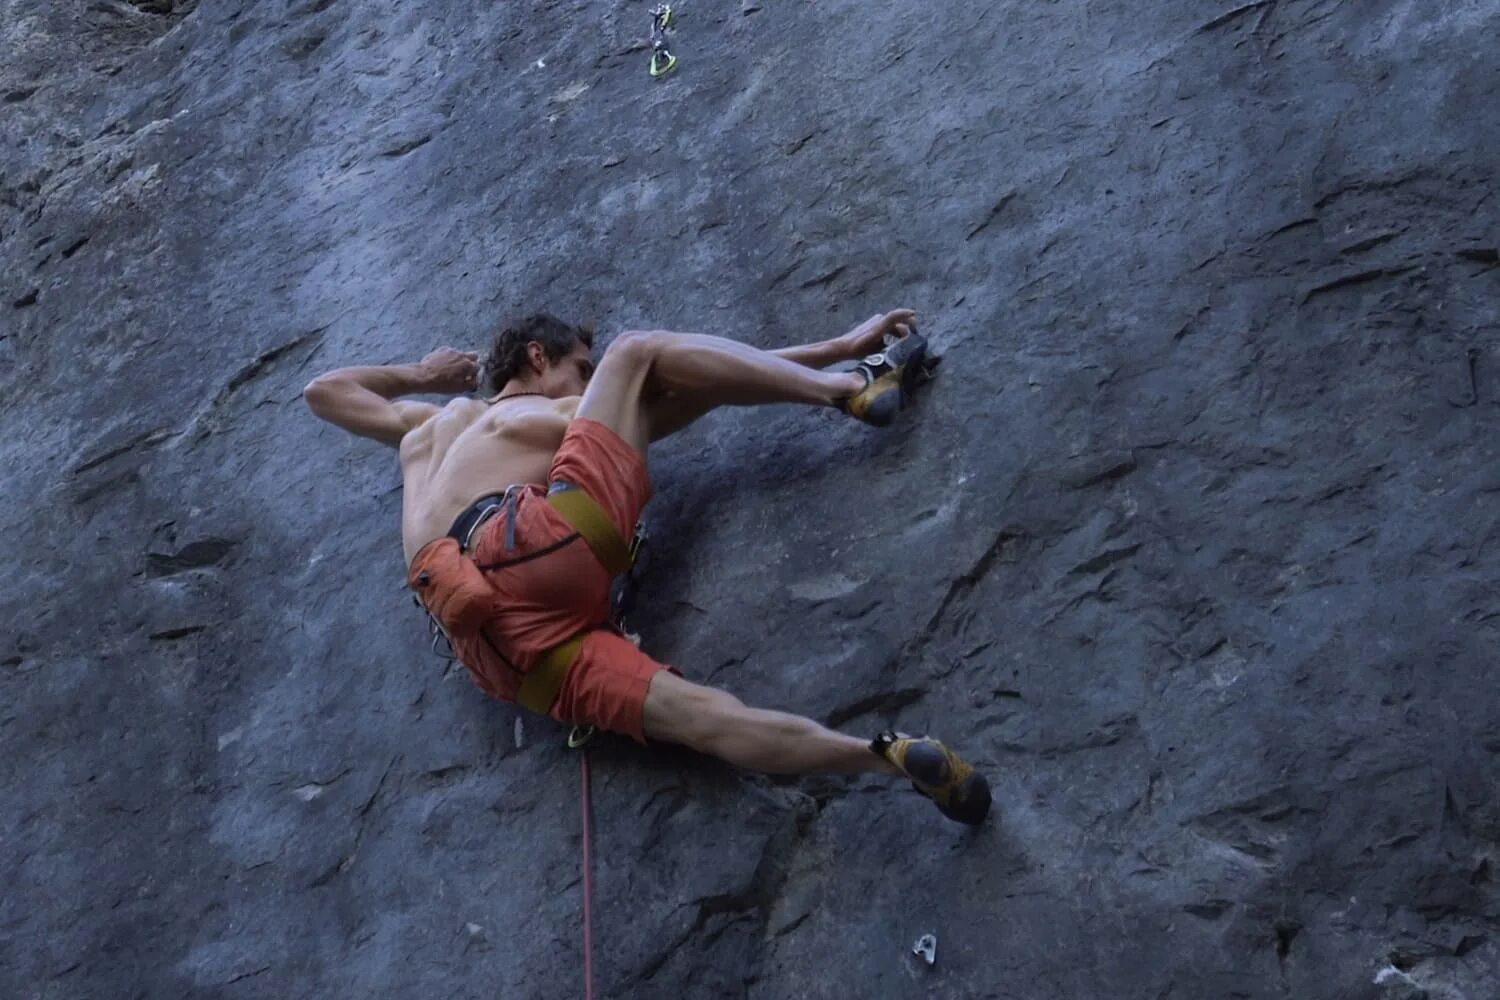 Скалолаз Сталлоне. Rock climbing is the most dangerous